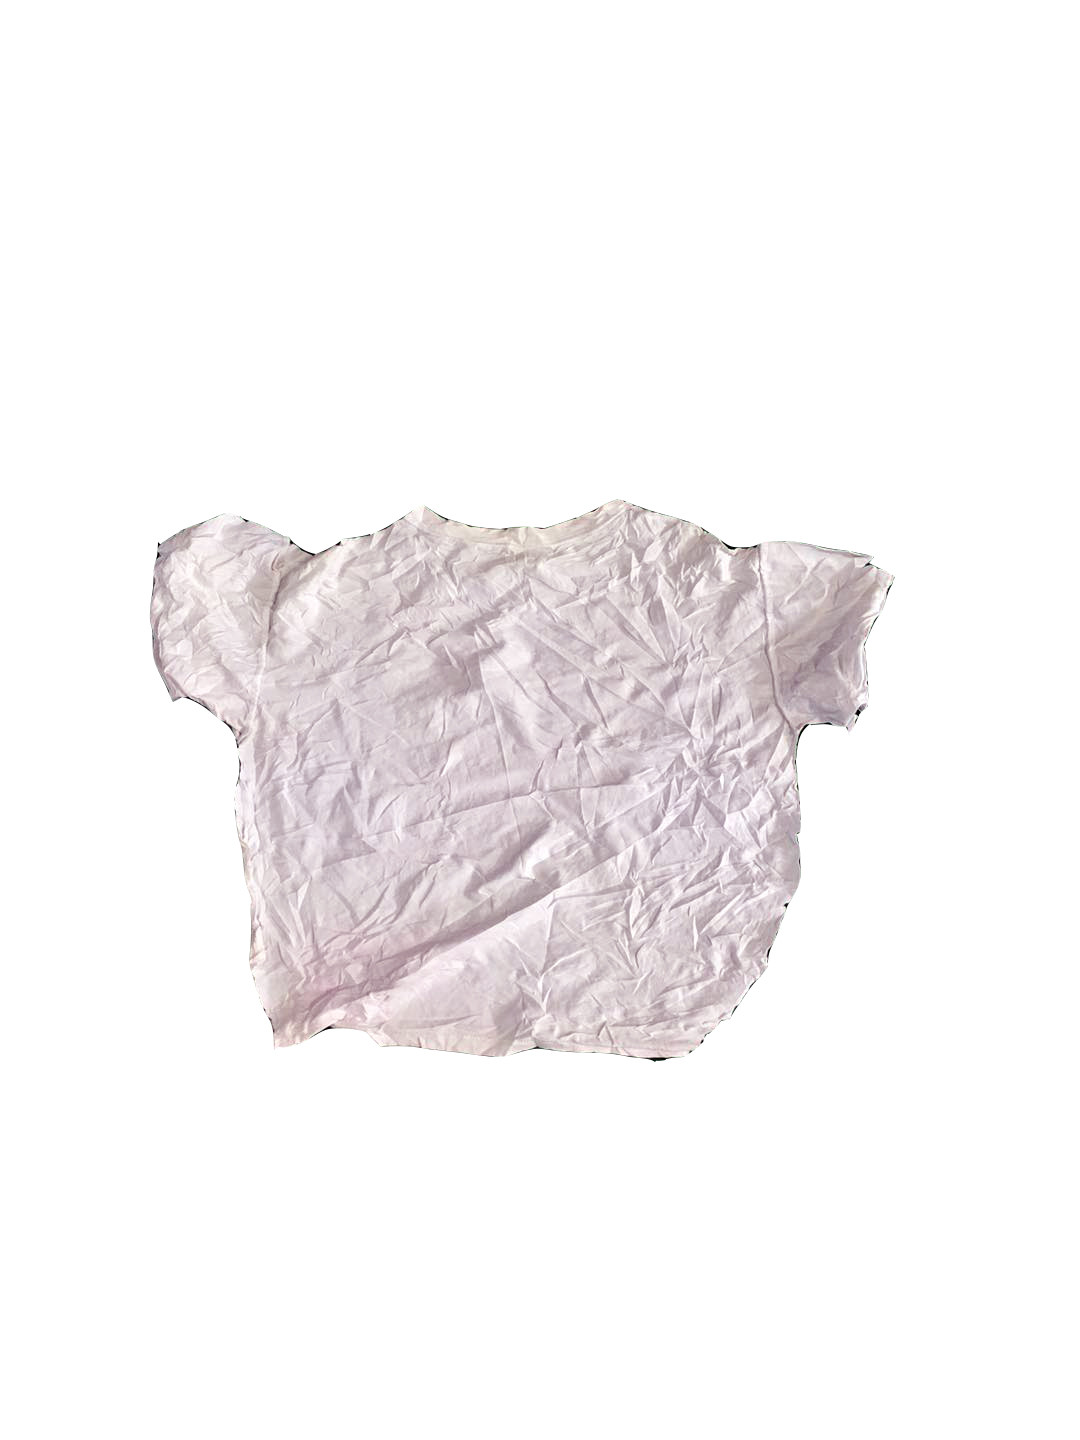 55*60cm No Metal Cotton White T Shirt Rags IMPA